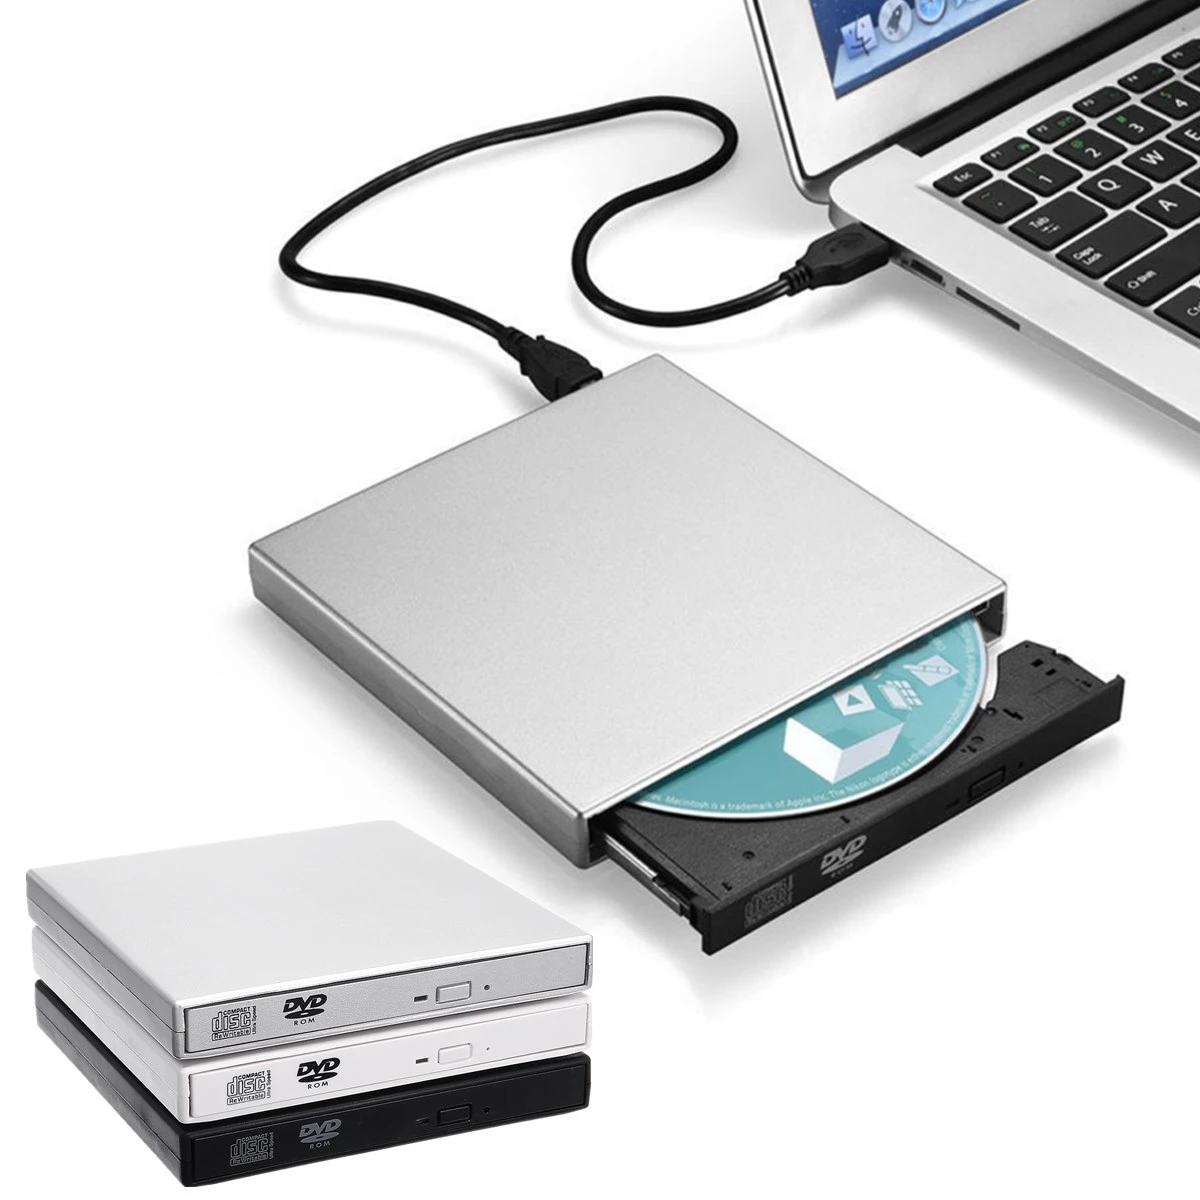 S SKYEE Unidad óptica externa de DVD, Combo USB 2,0, quemador de CD,  reproductor de DVD ROM de CD/CD RW, grabadora portátil delgada para  ordenador portátil y PC|Unidades ópticas| - AliExpress